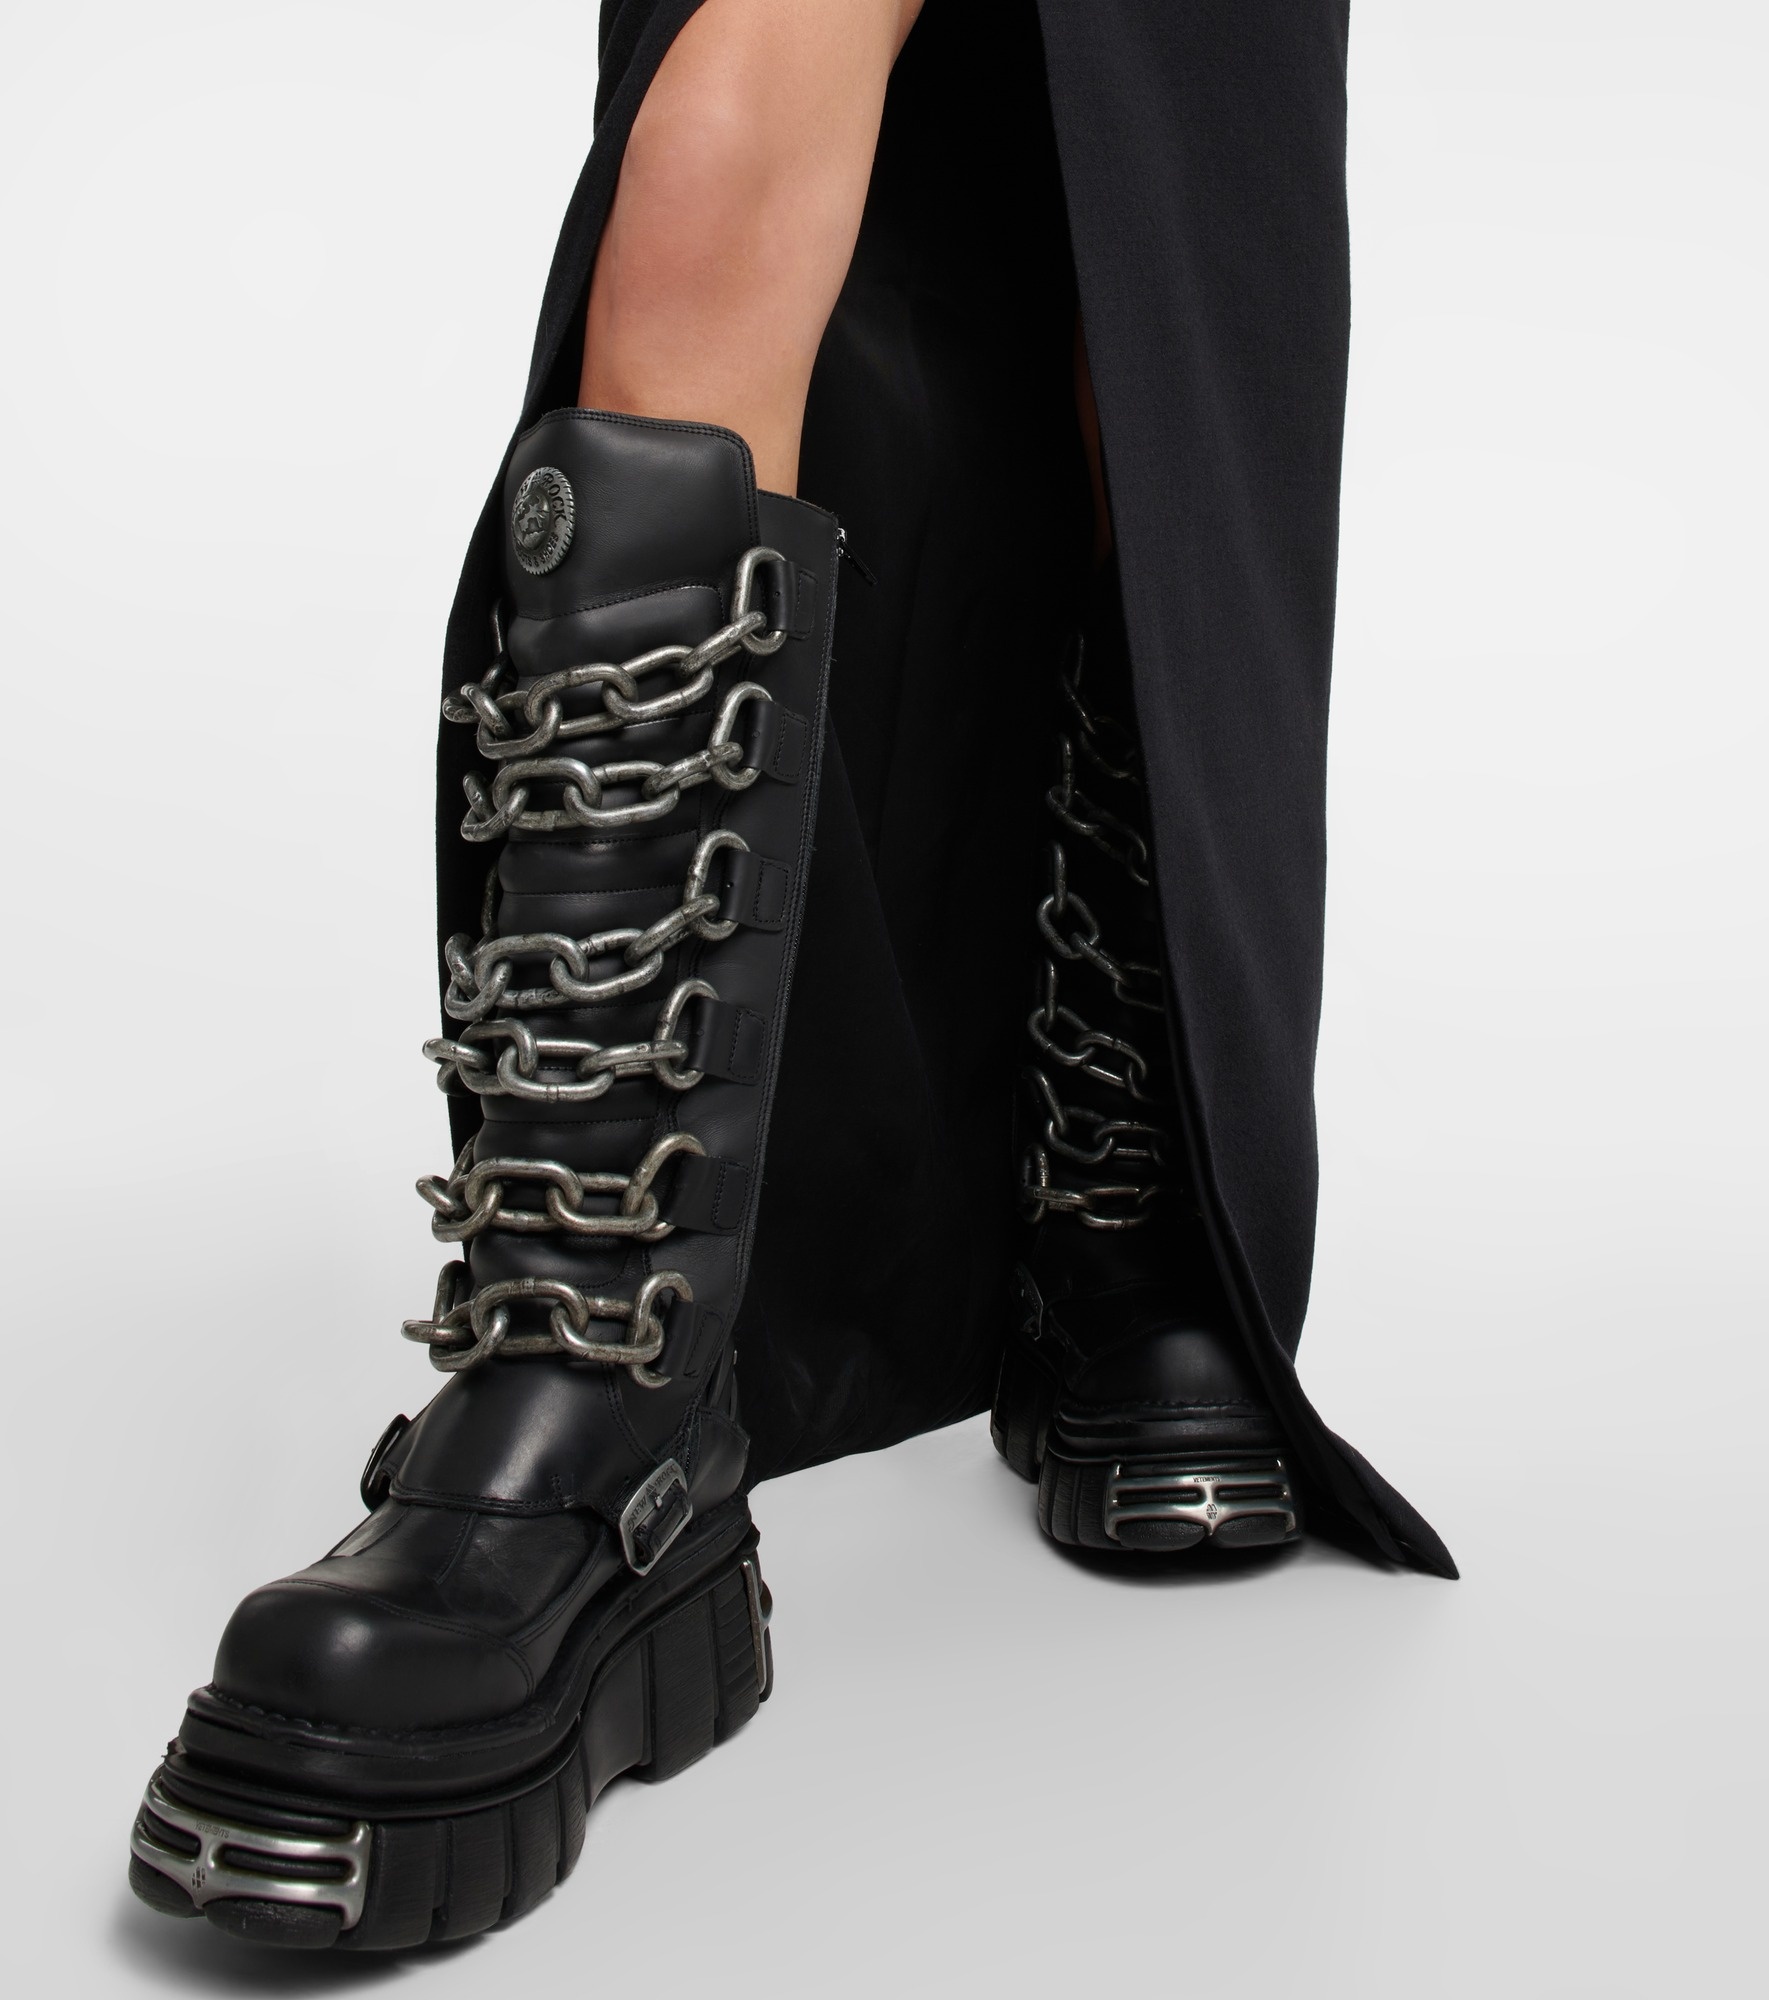 x New Rock leather platform boots - 4